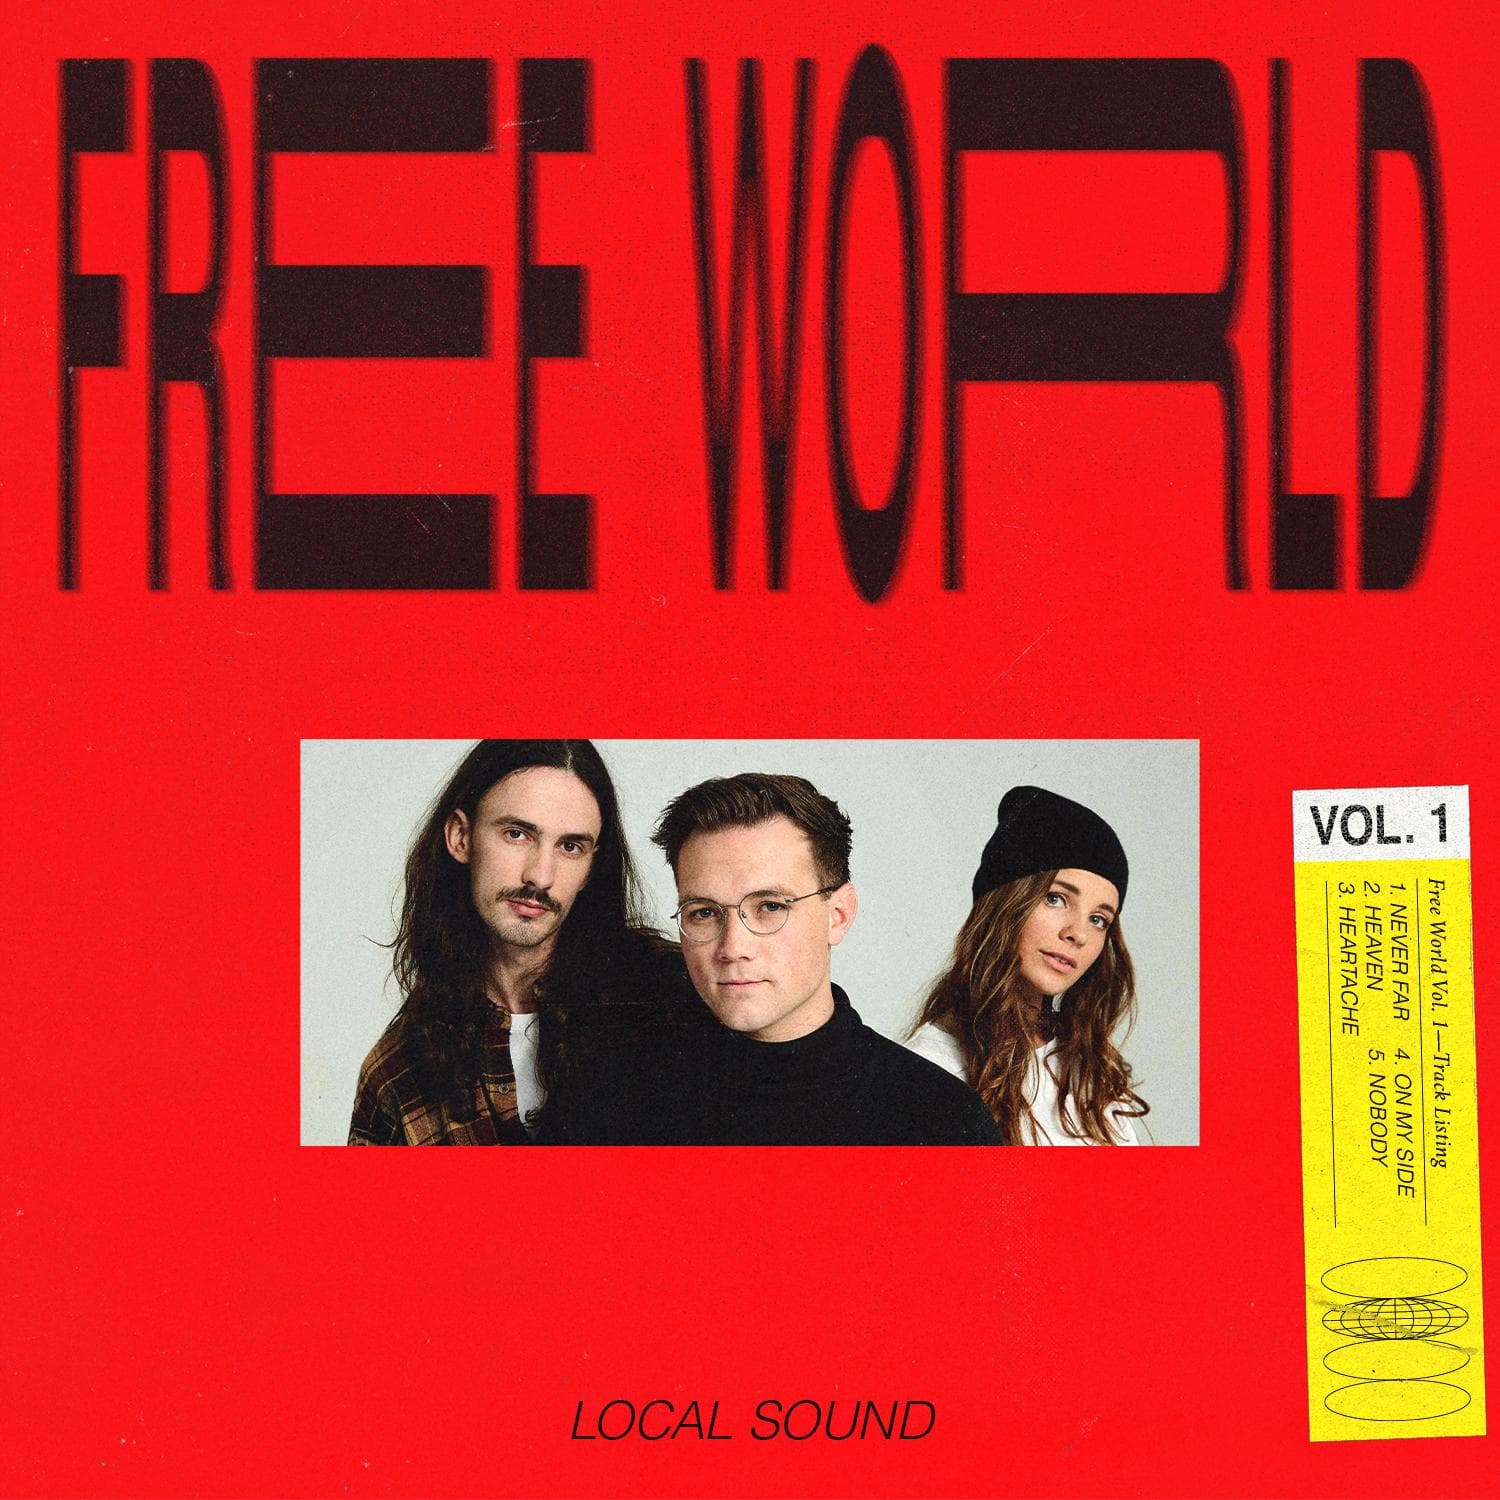 The Free World, Vol. 1 - Local Sound